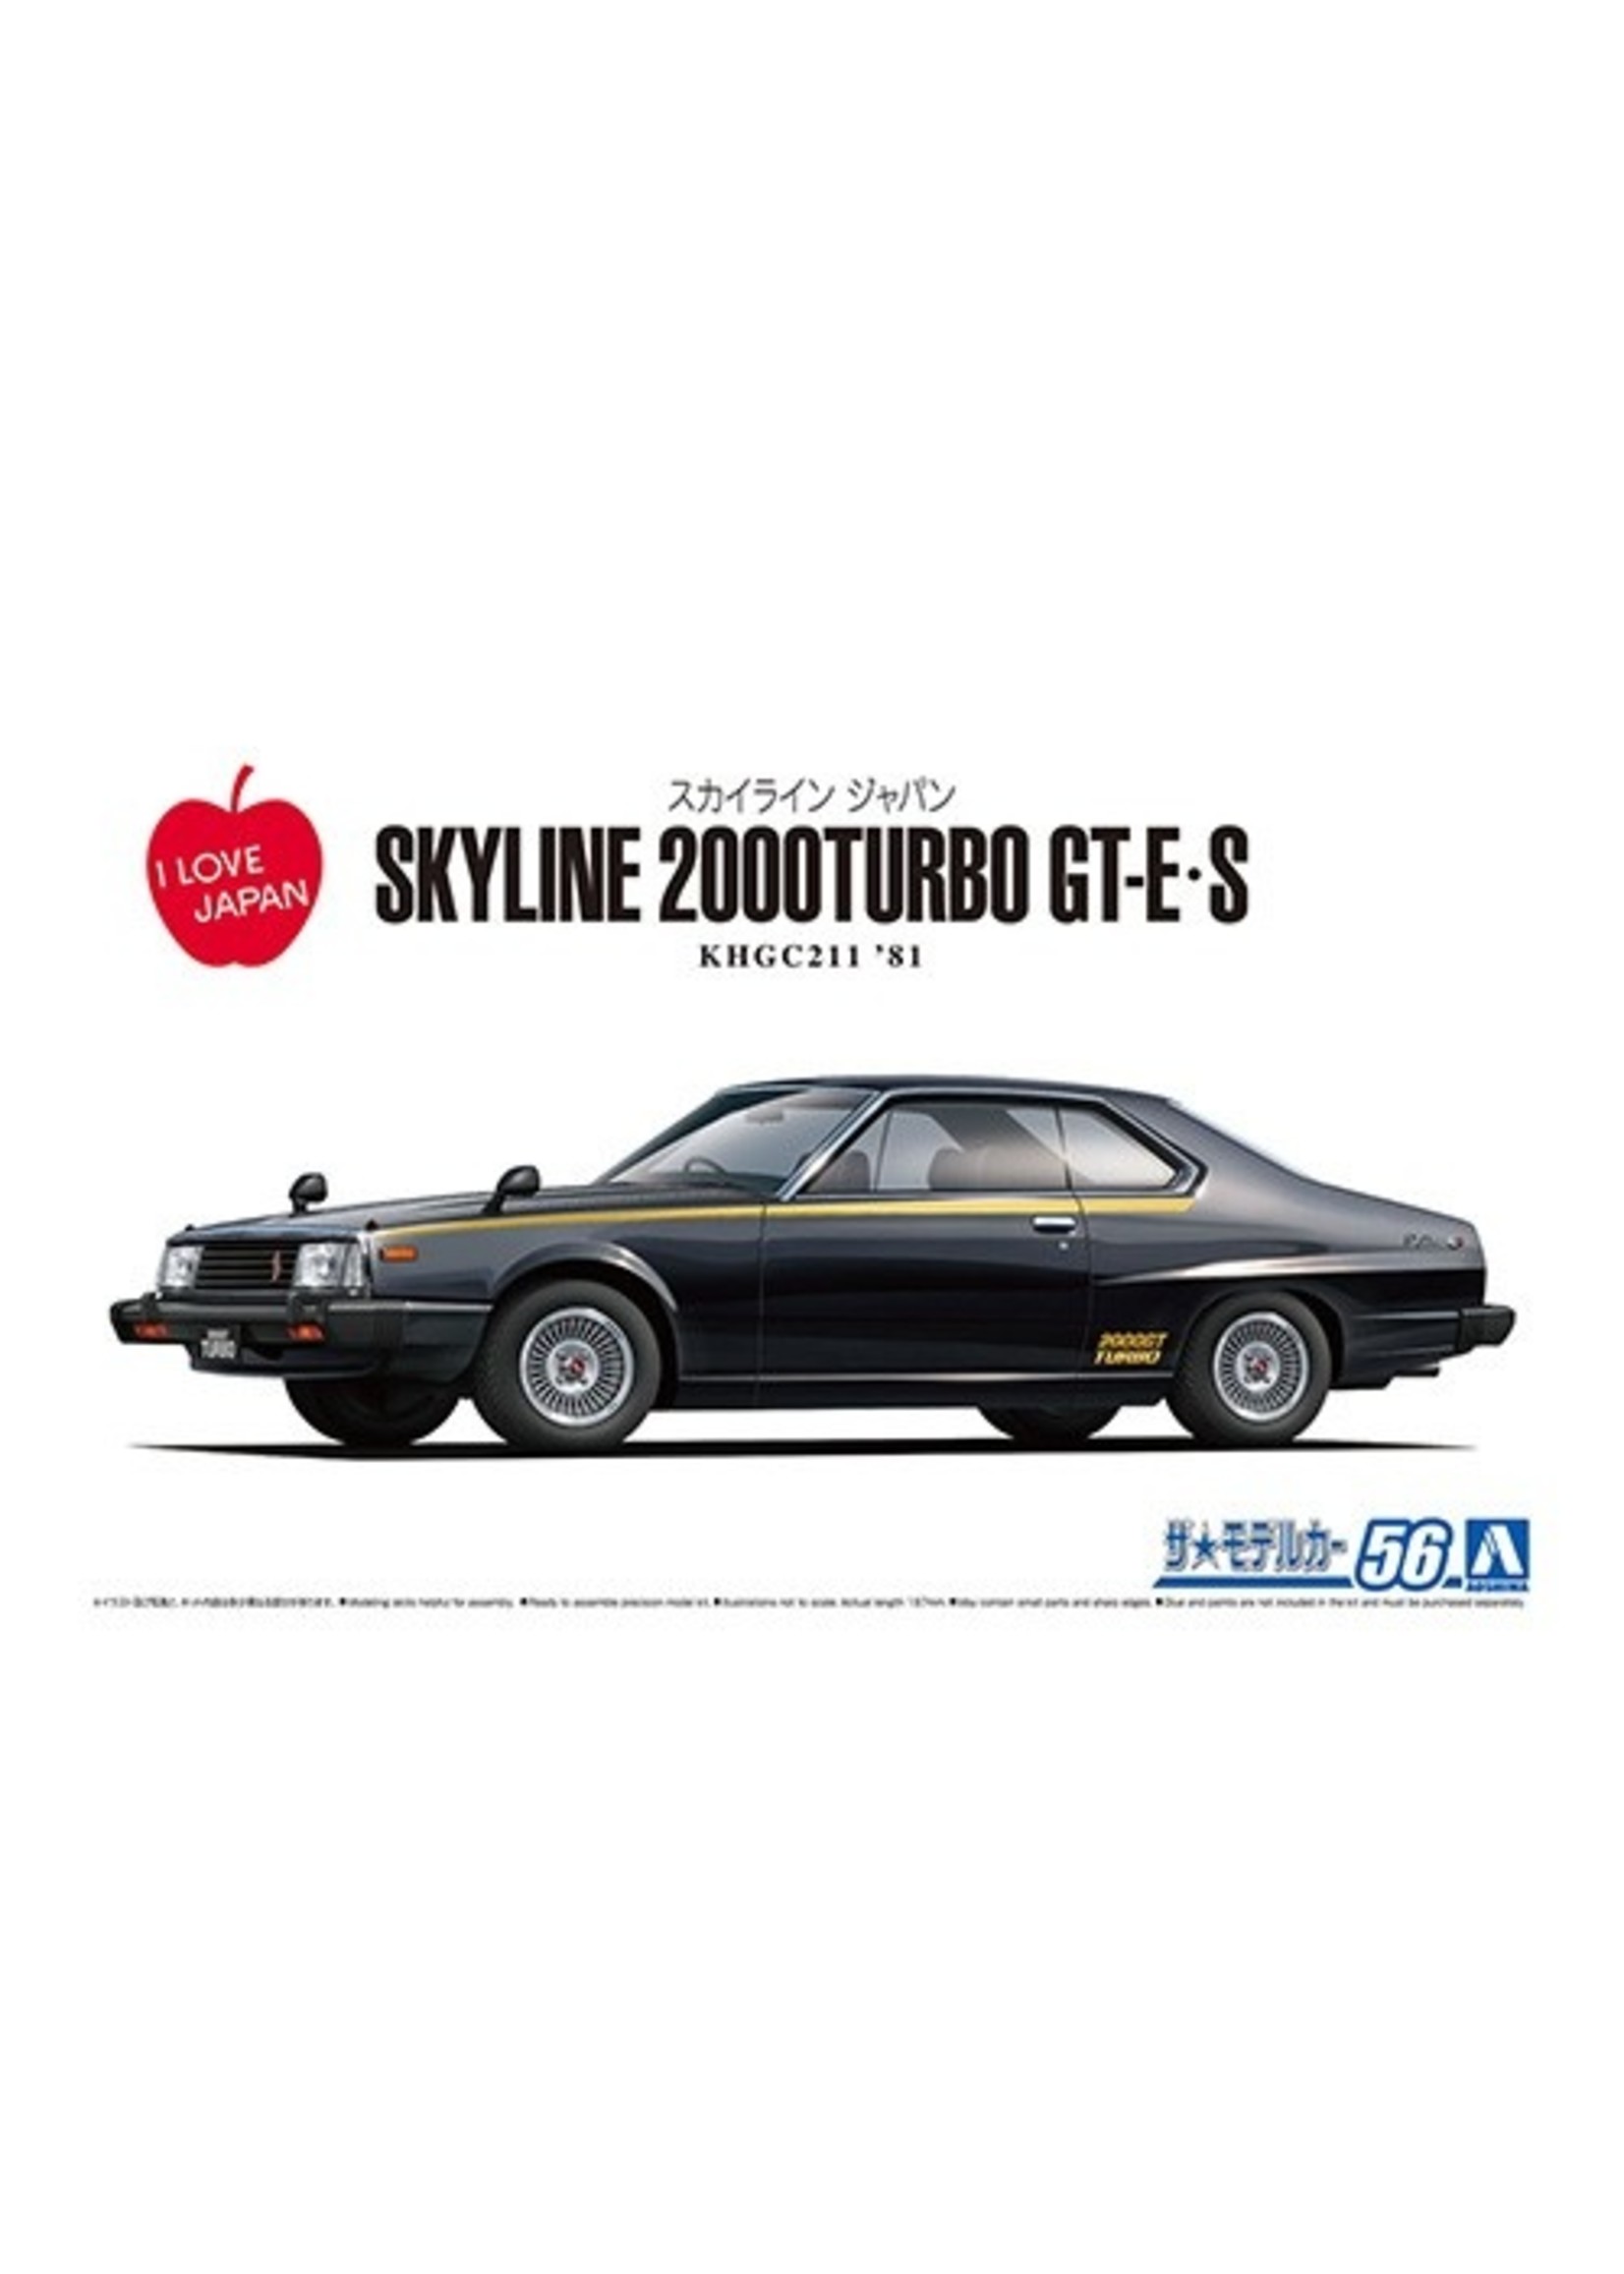 Aoshima 06108 - 1/24 Nissan KHGC211 Skyline HT2000Turbo GT-E S '81